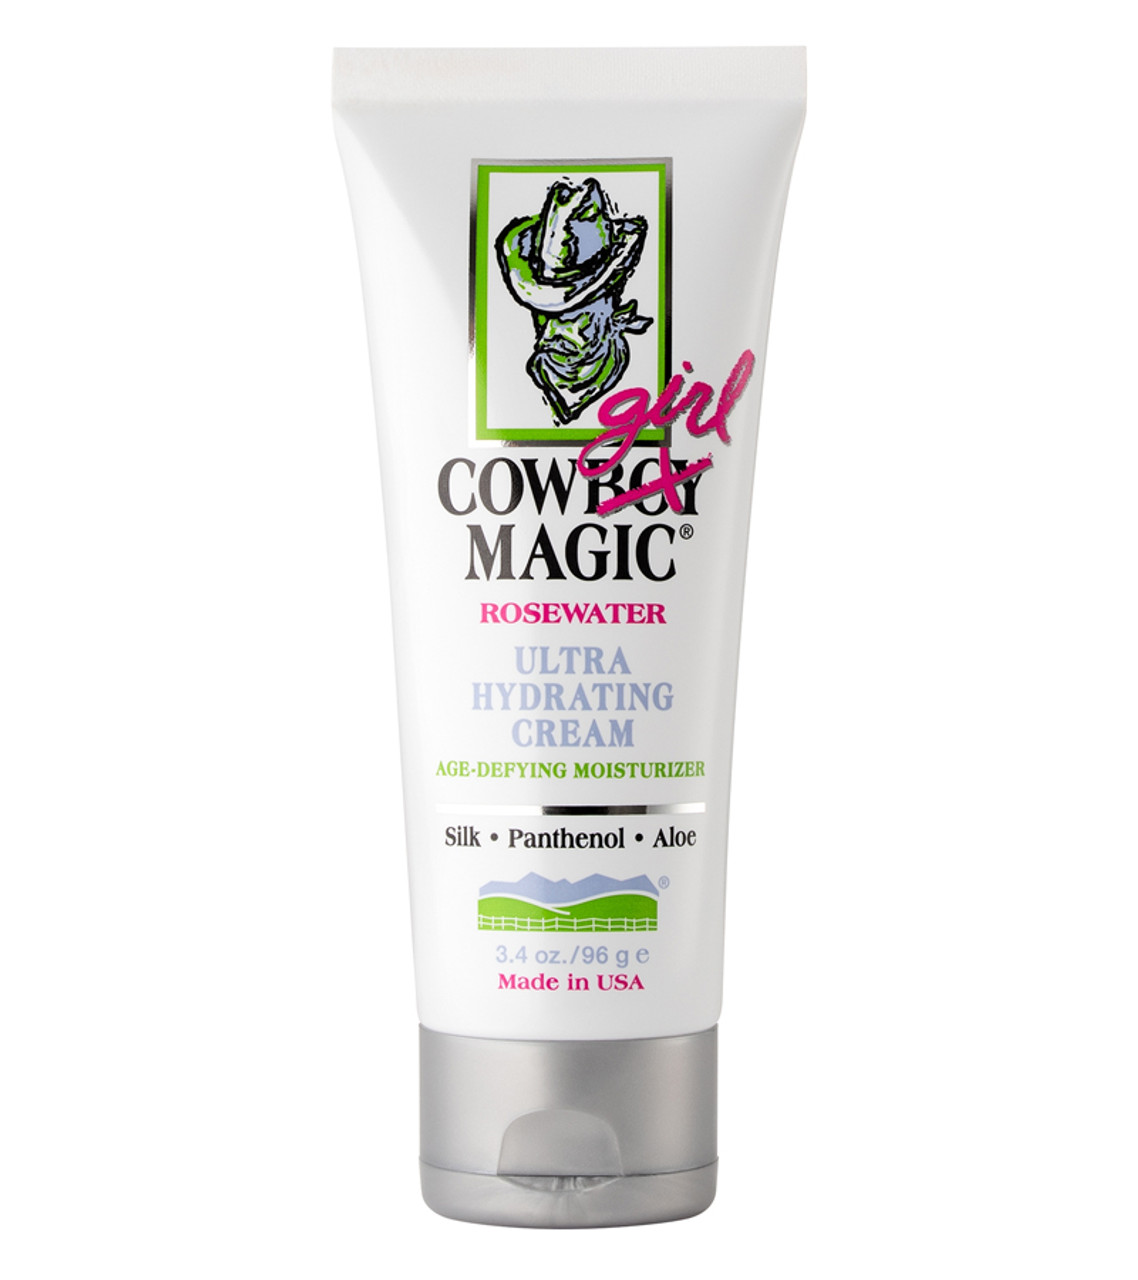 Cowgirl Magic Cream, Ultra Hydrating, Rosewater - 3.4 oz